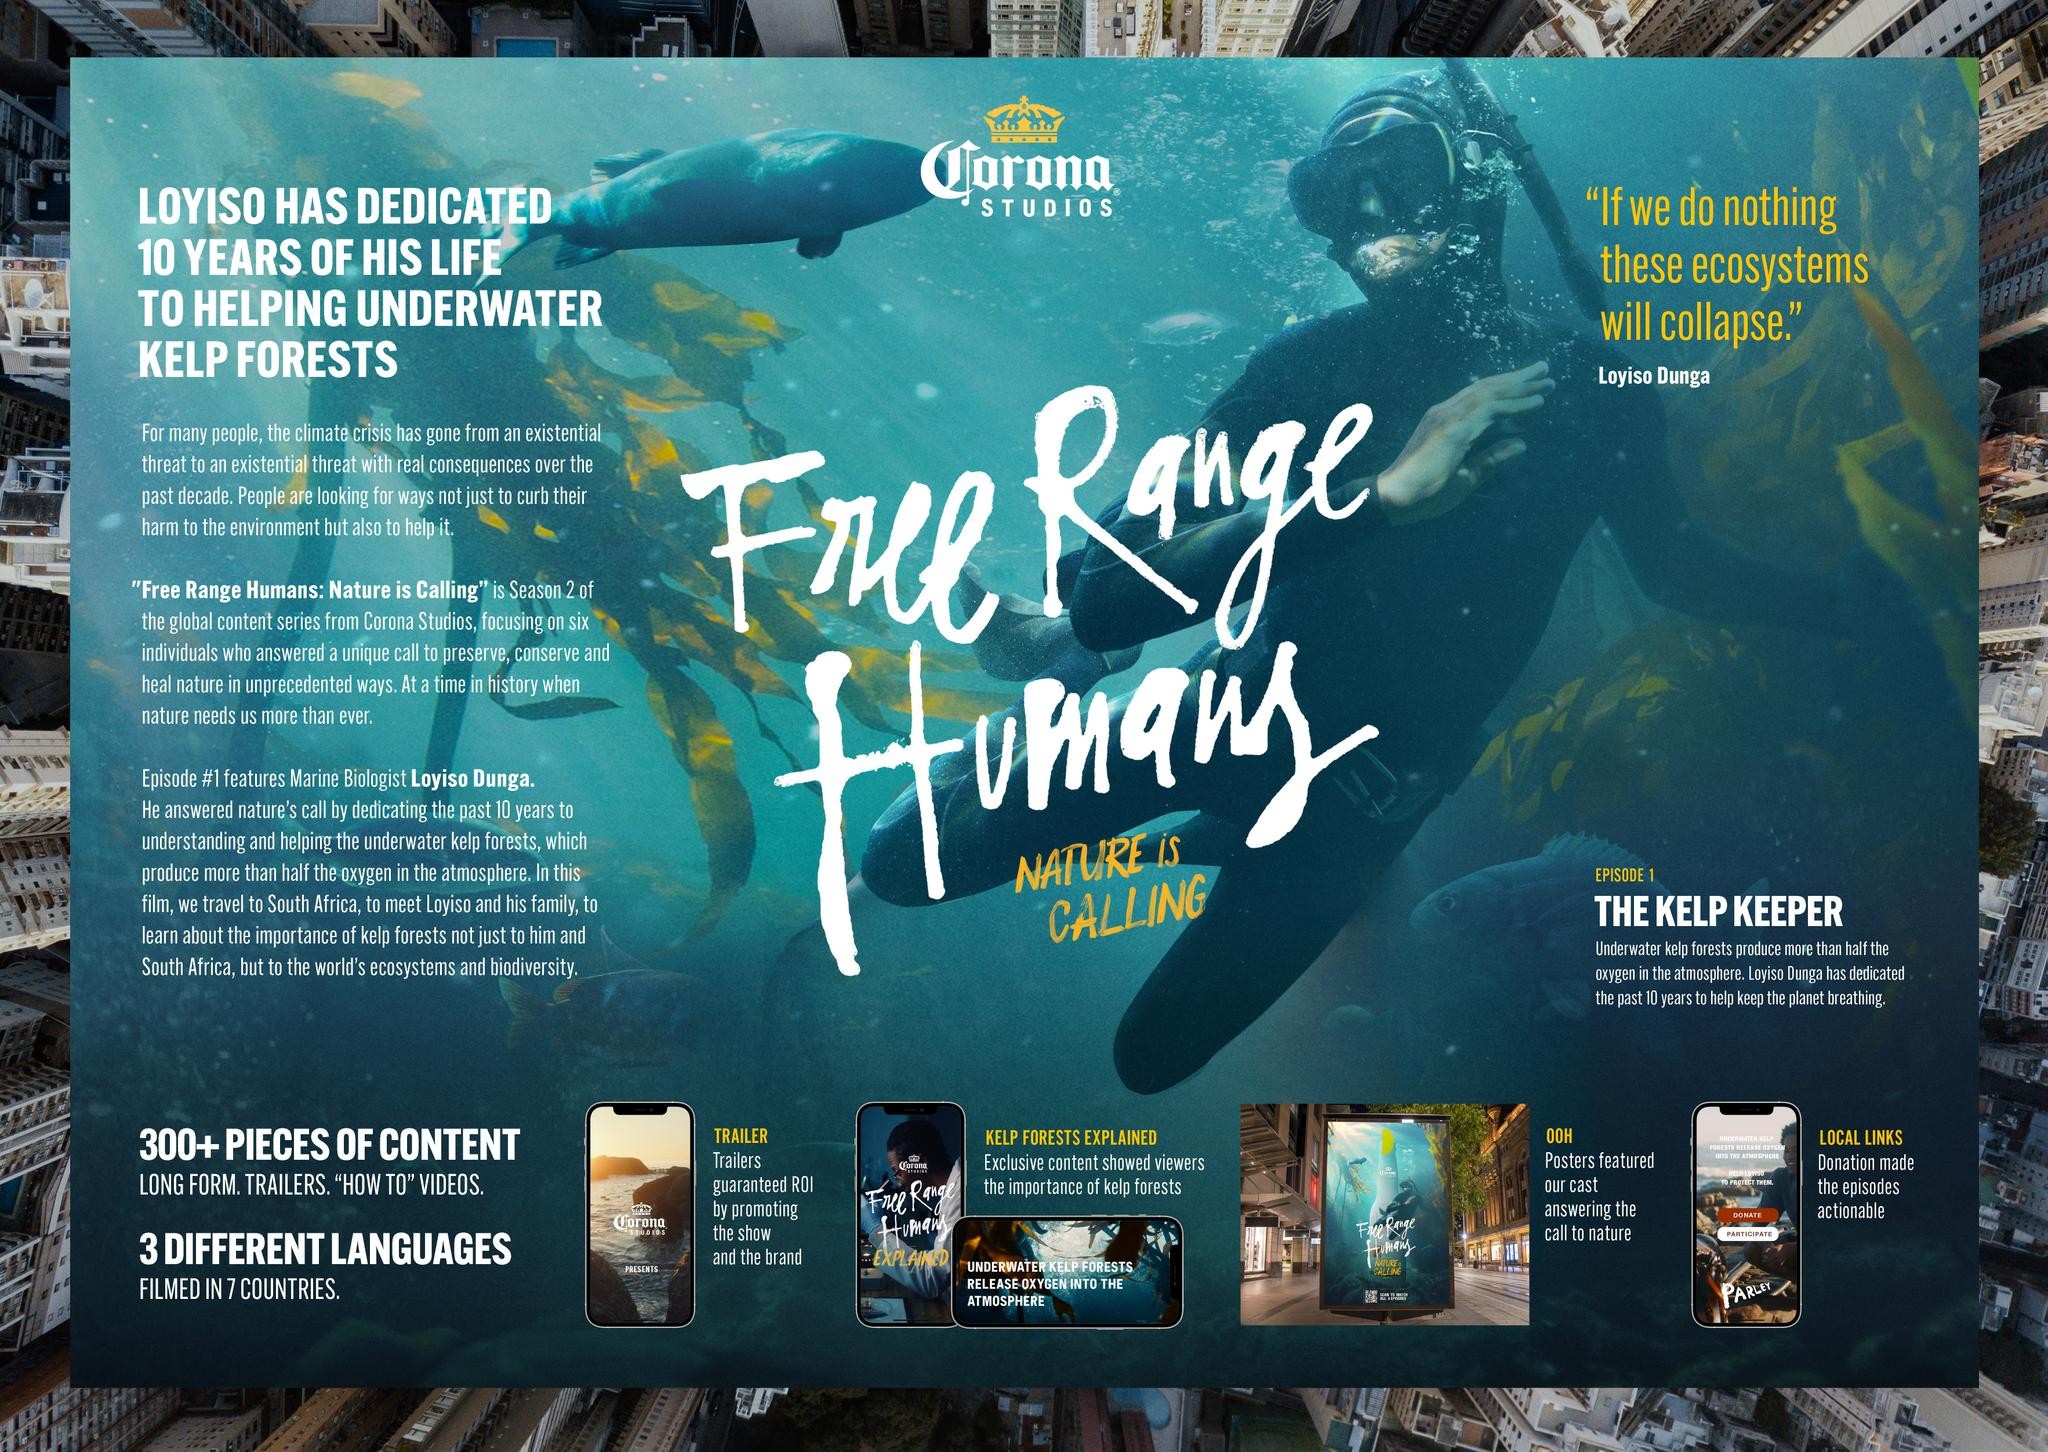 Free Range Humans Season 2: Nature is Calling "The Kelp Keeper"